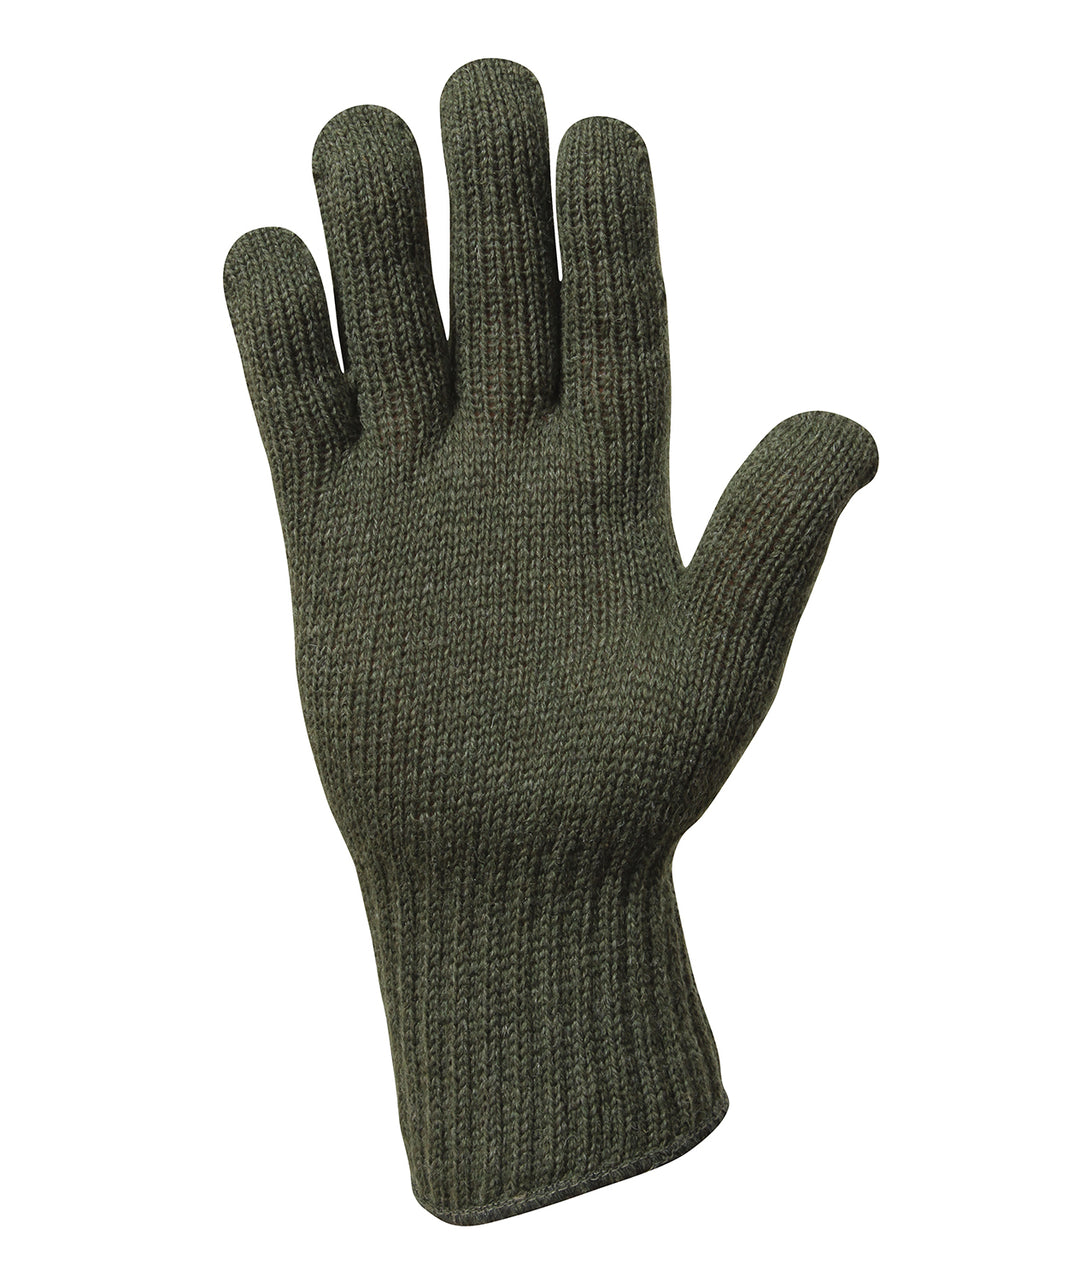 Rothco G.I. Glove Liners